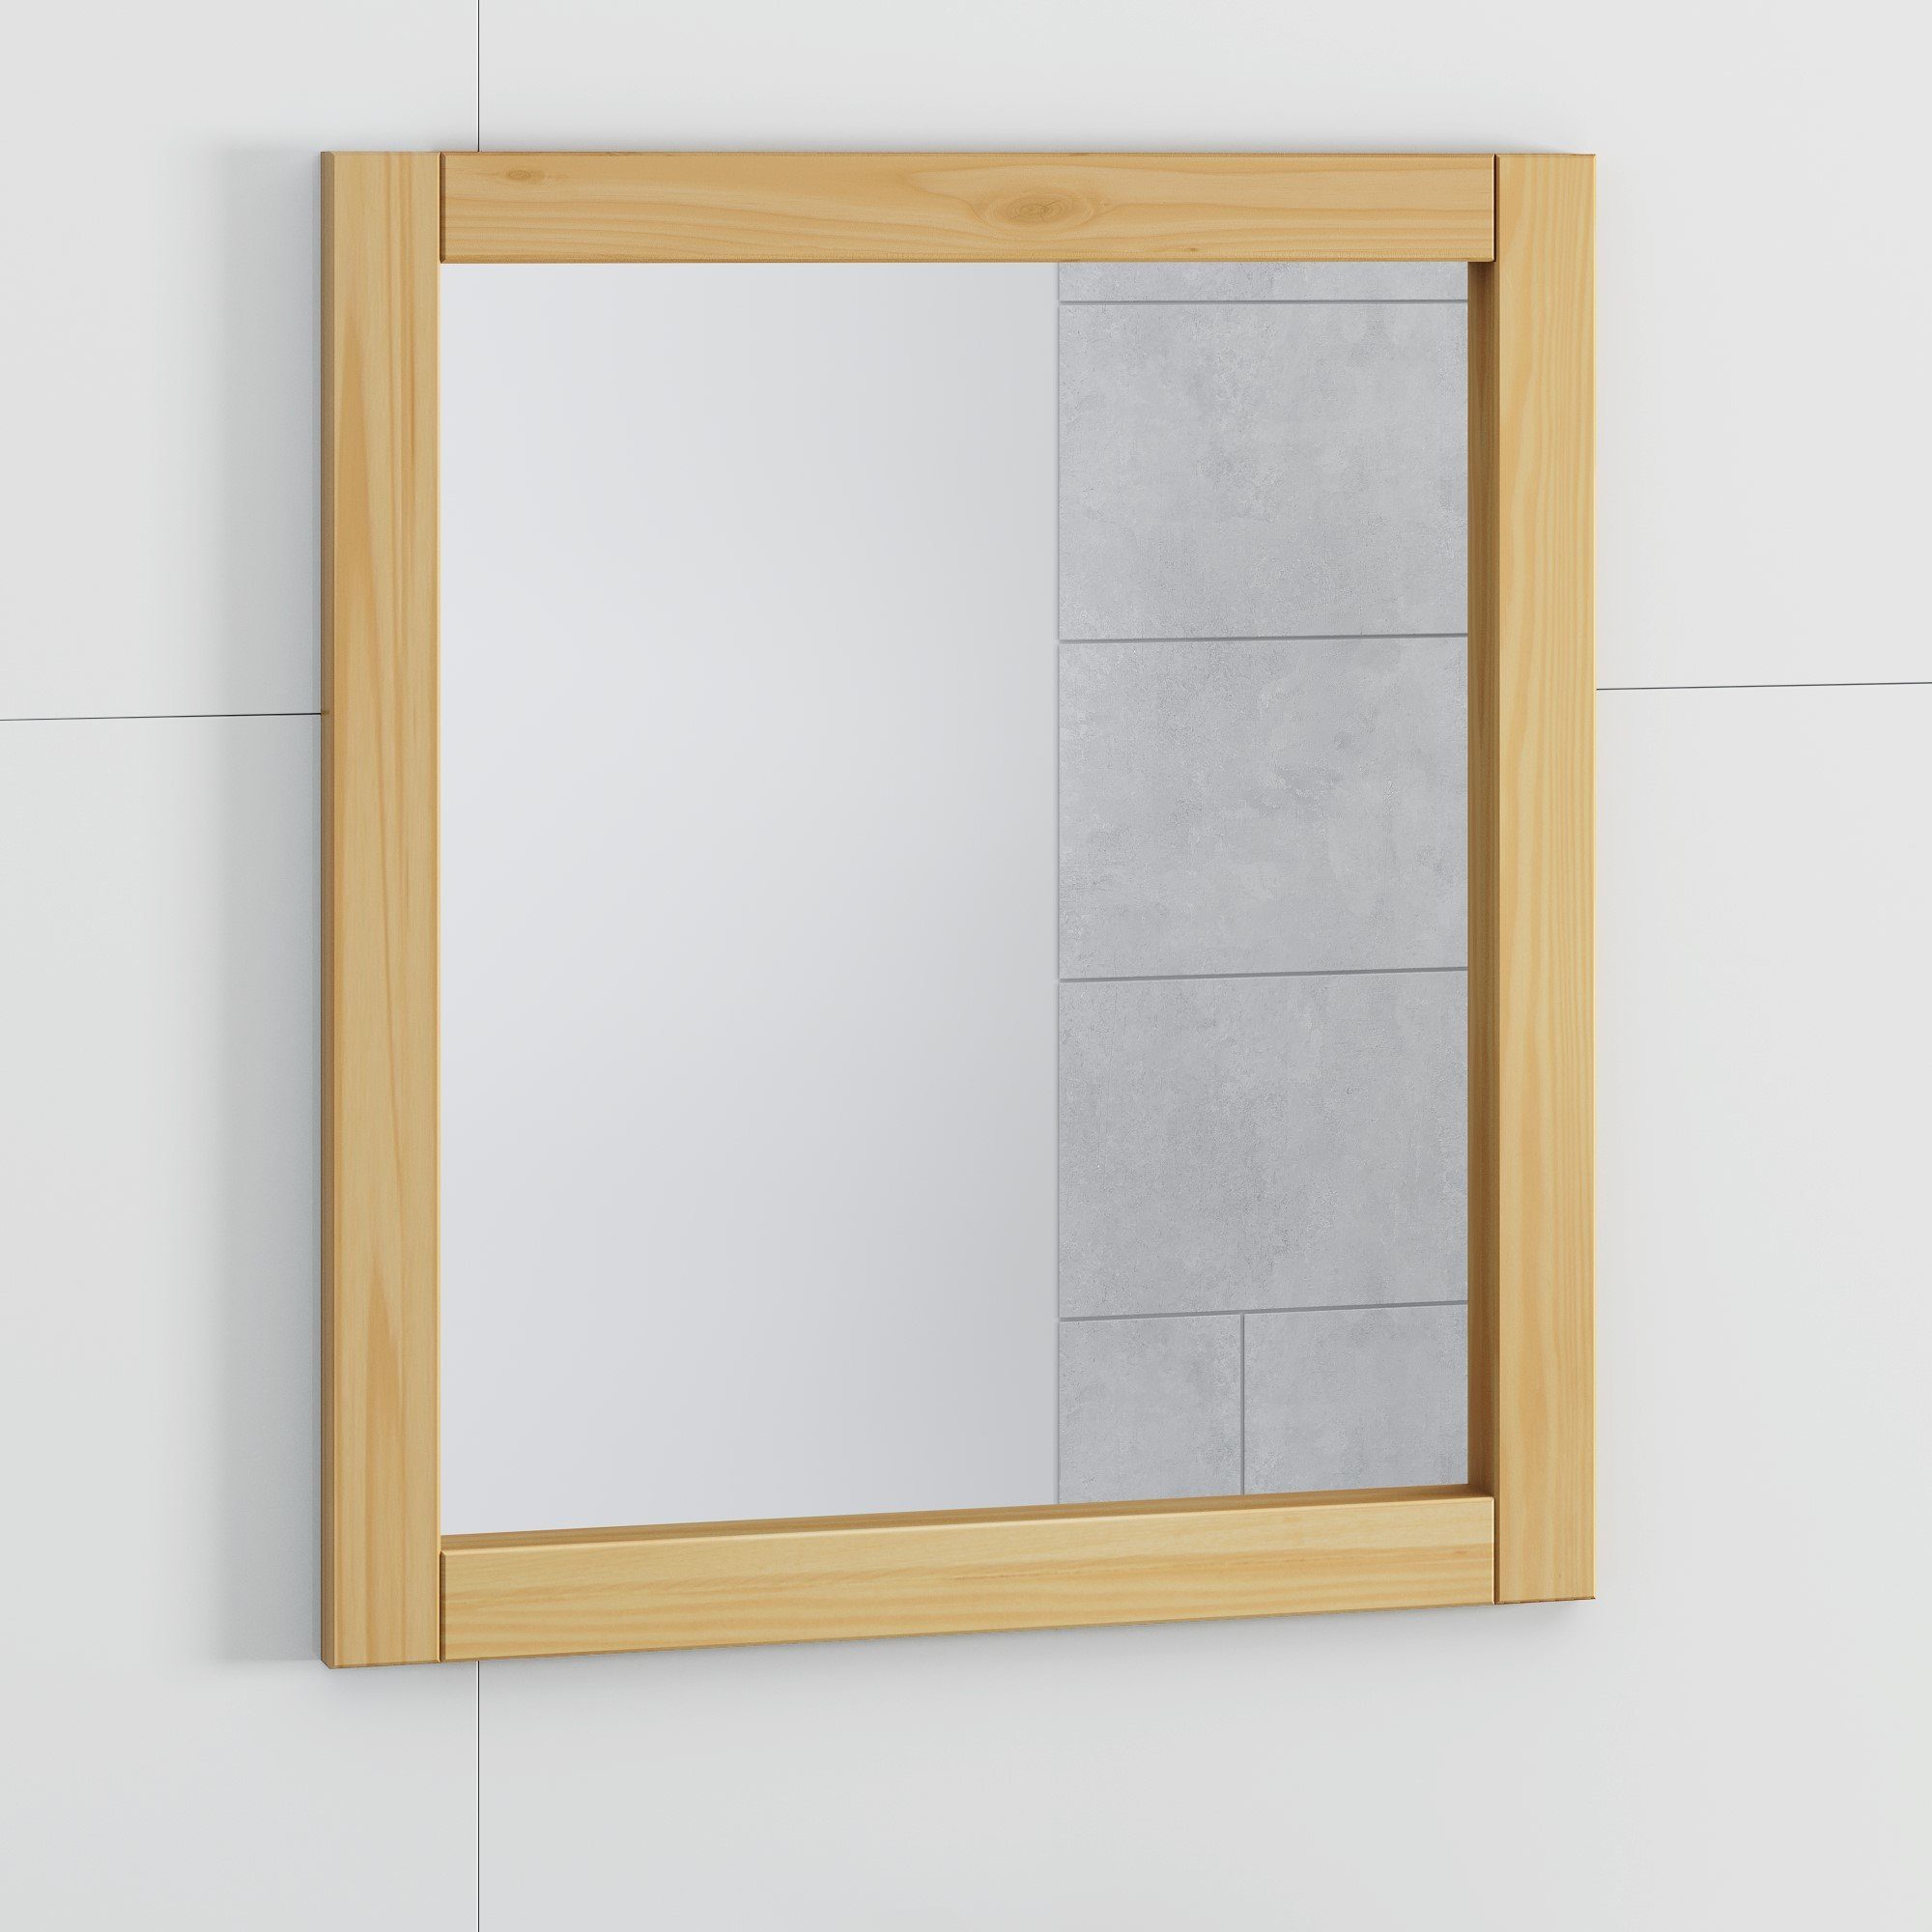 BxHxT massiv Woodroom Spiegel lackiert, 62x70x3 eichefarig cm Sevilla, Kiefer